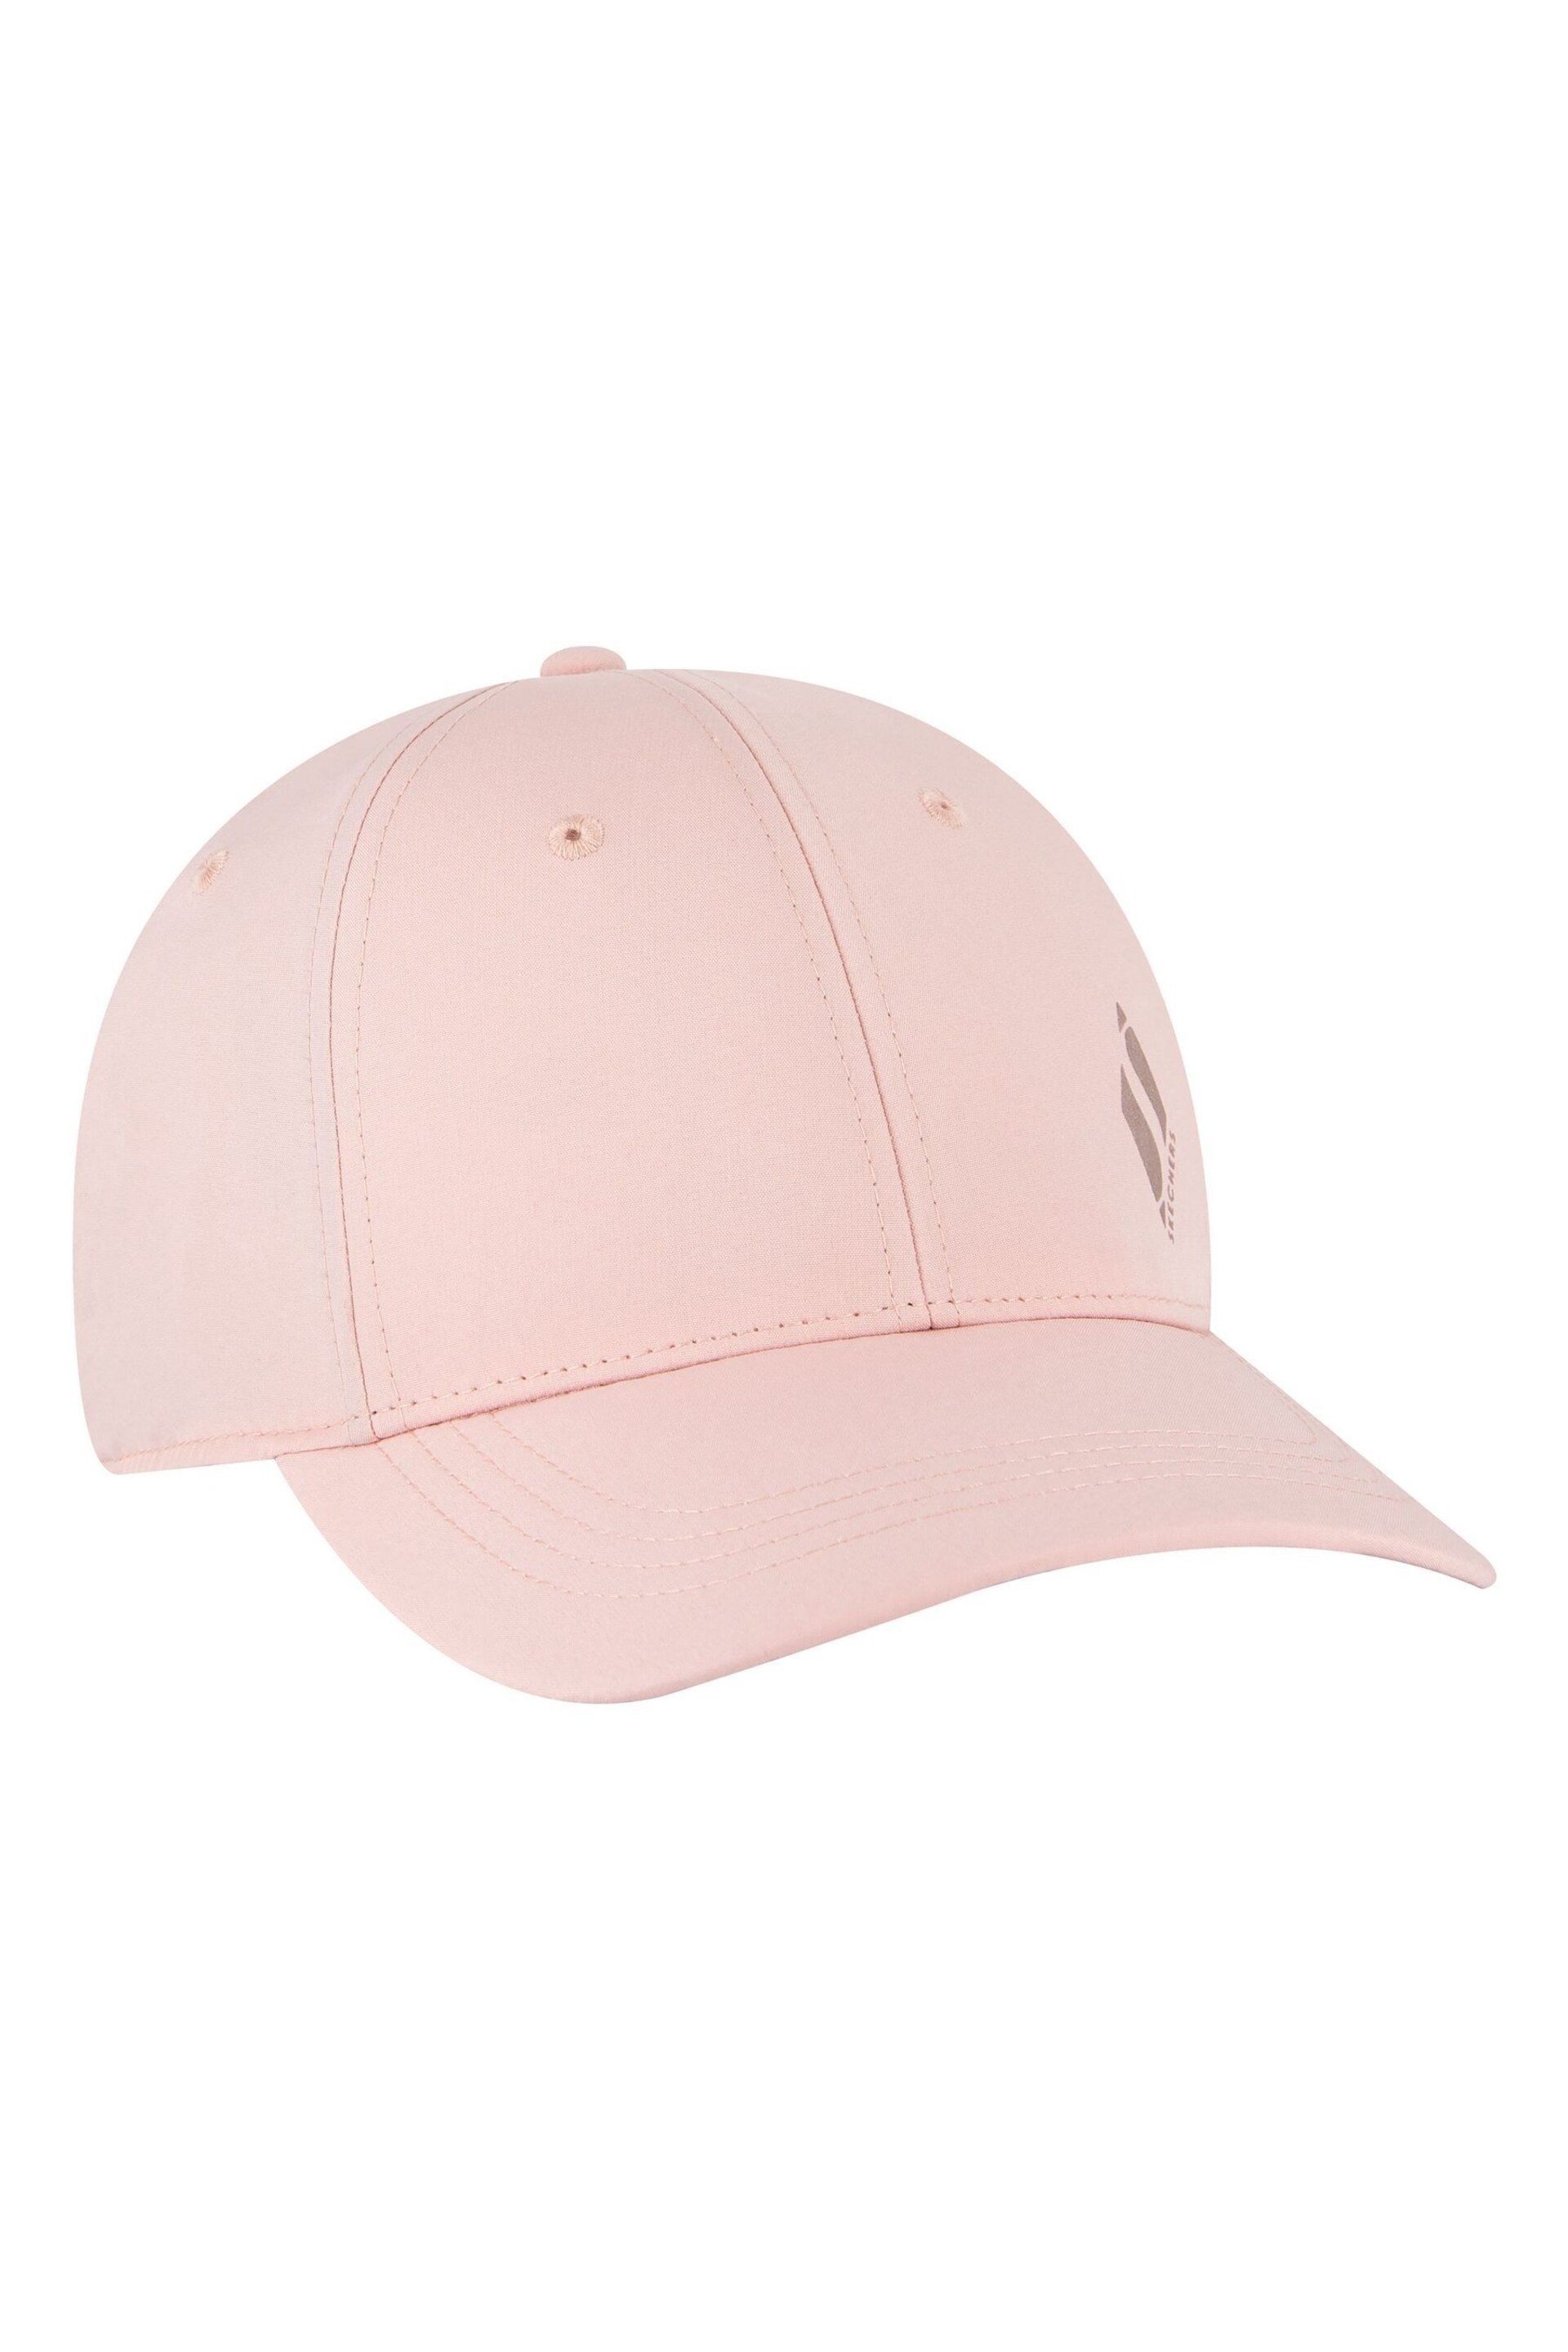 Skechers Pink Skech-Shine Rose Gold Diamond Hat - Image 2 of 5